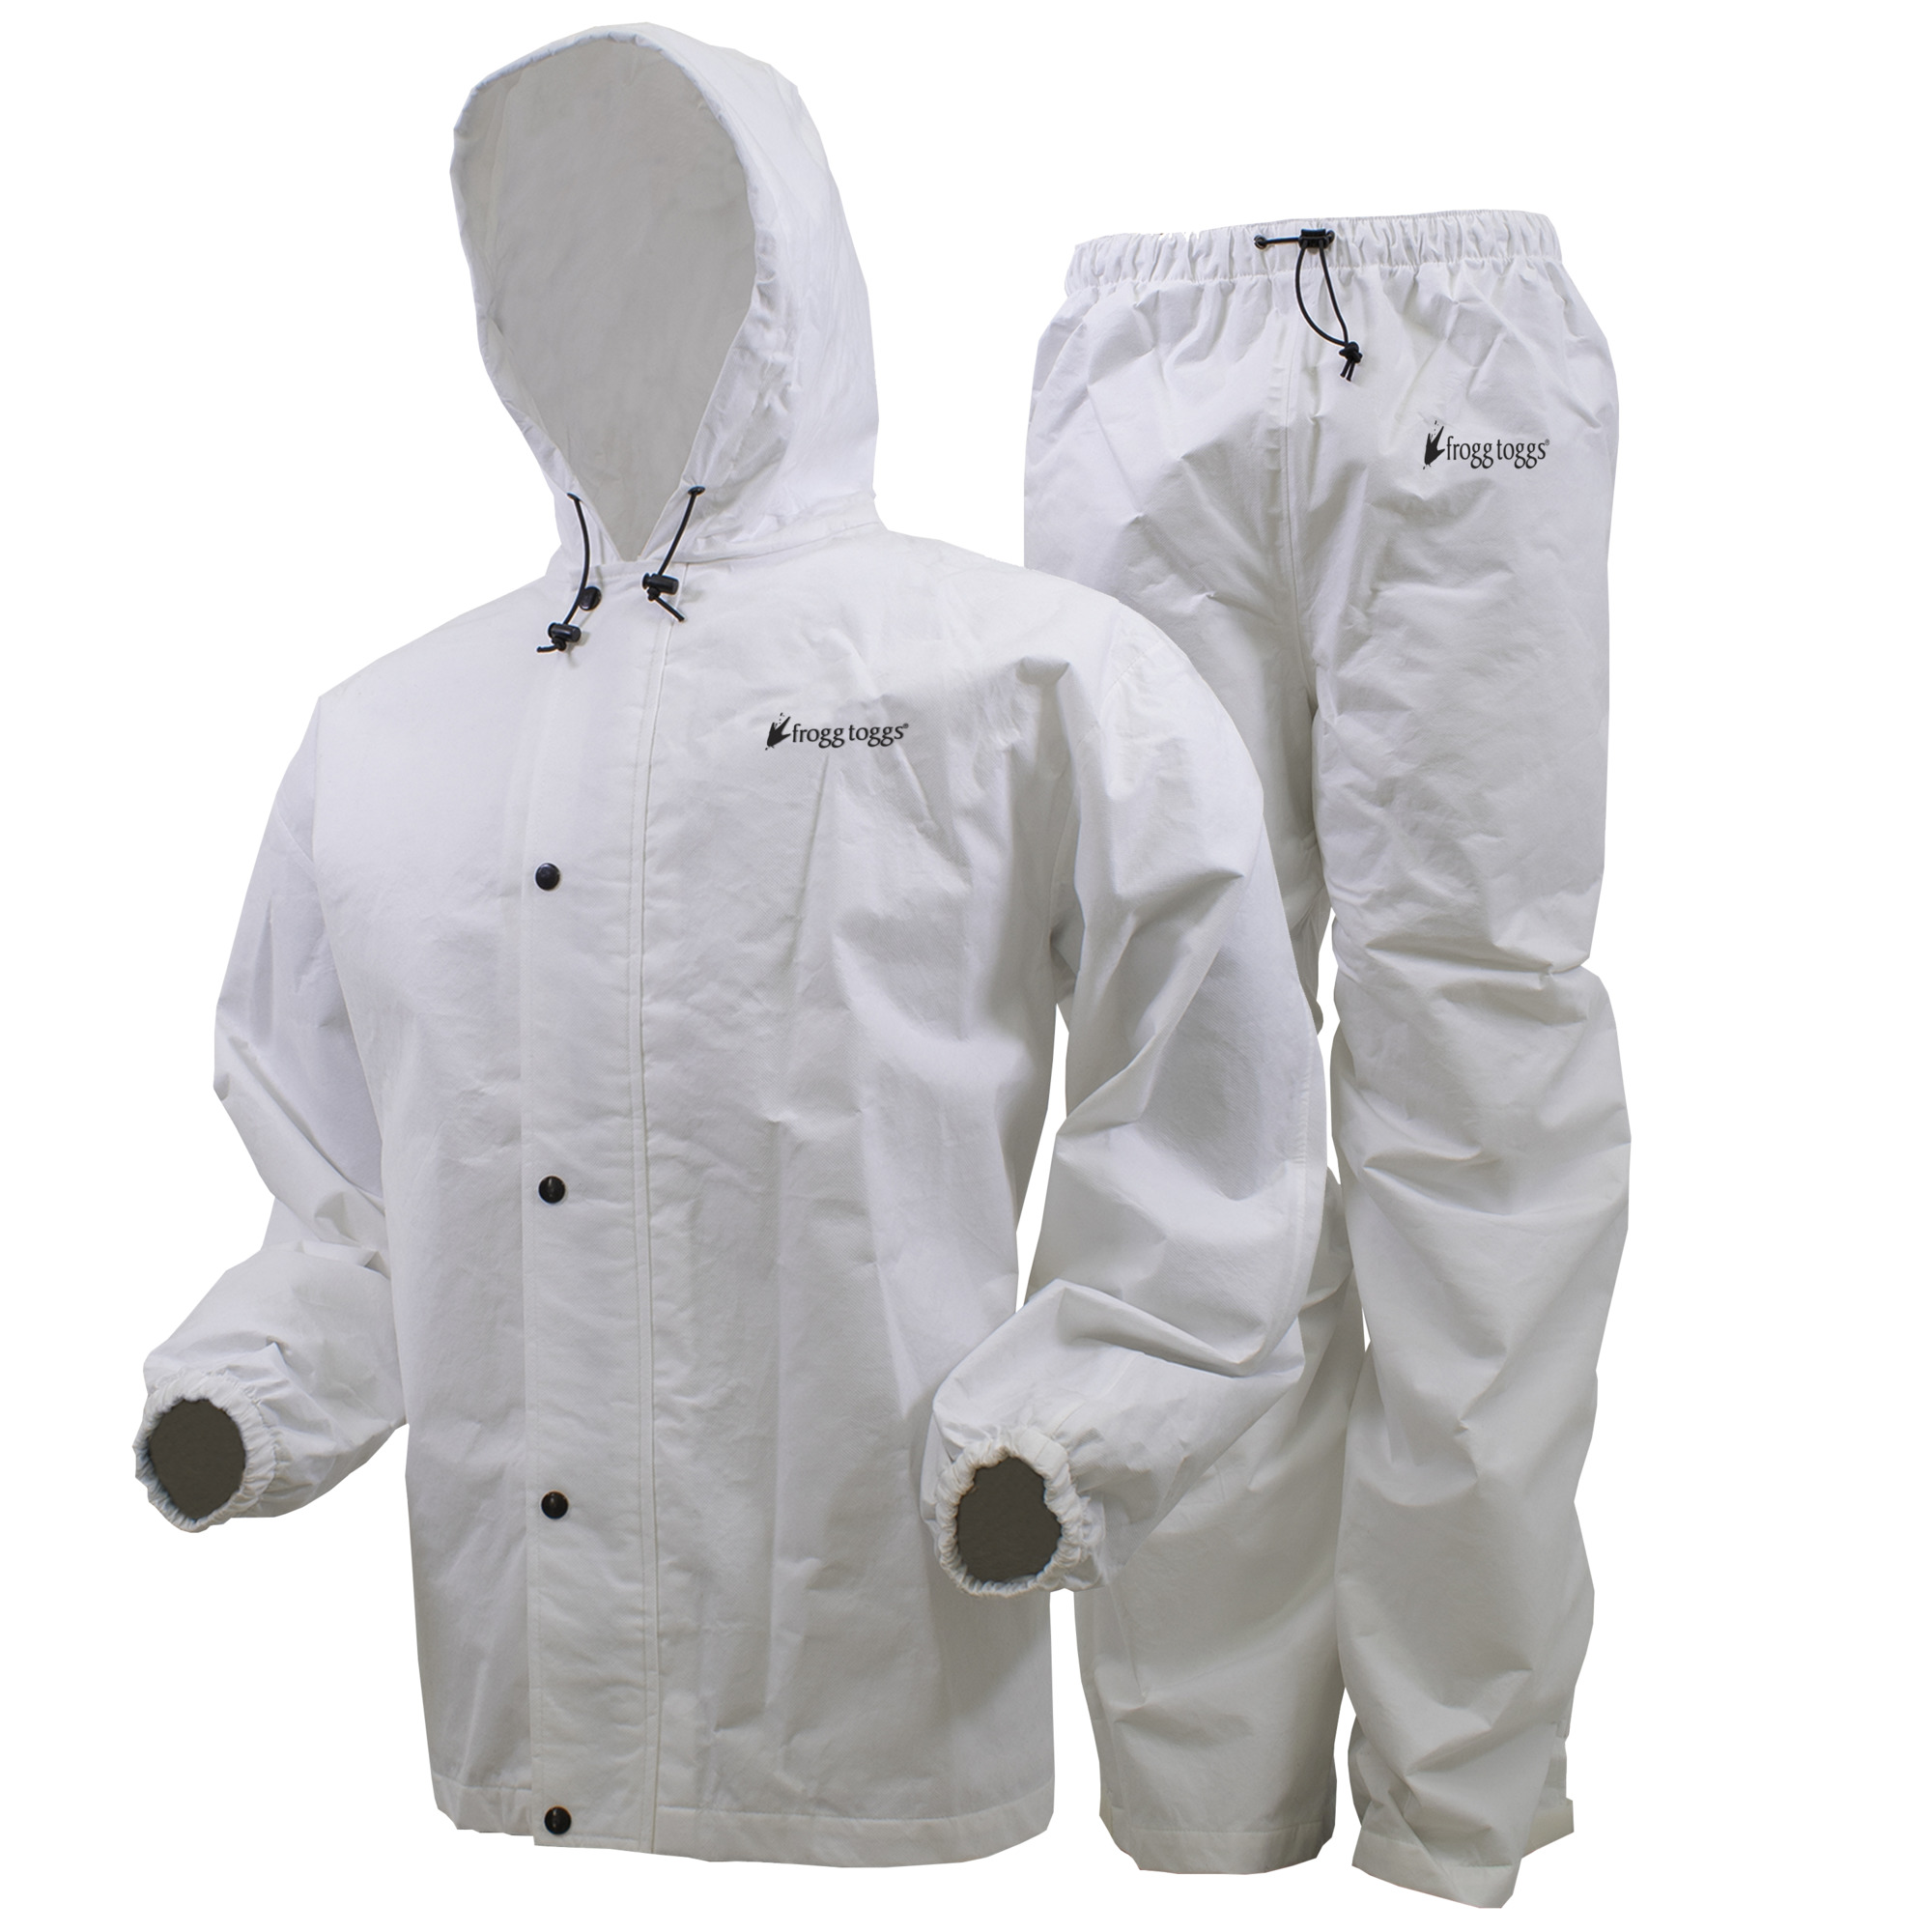 frogg toggs Men's Classic All Sport Rain Suit, L, White, Model AS1310-03LG